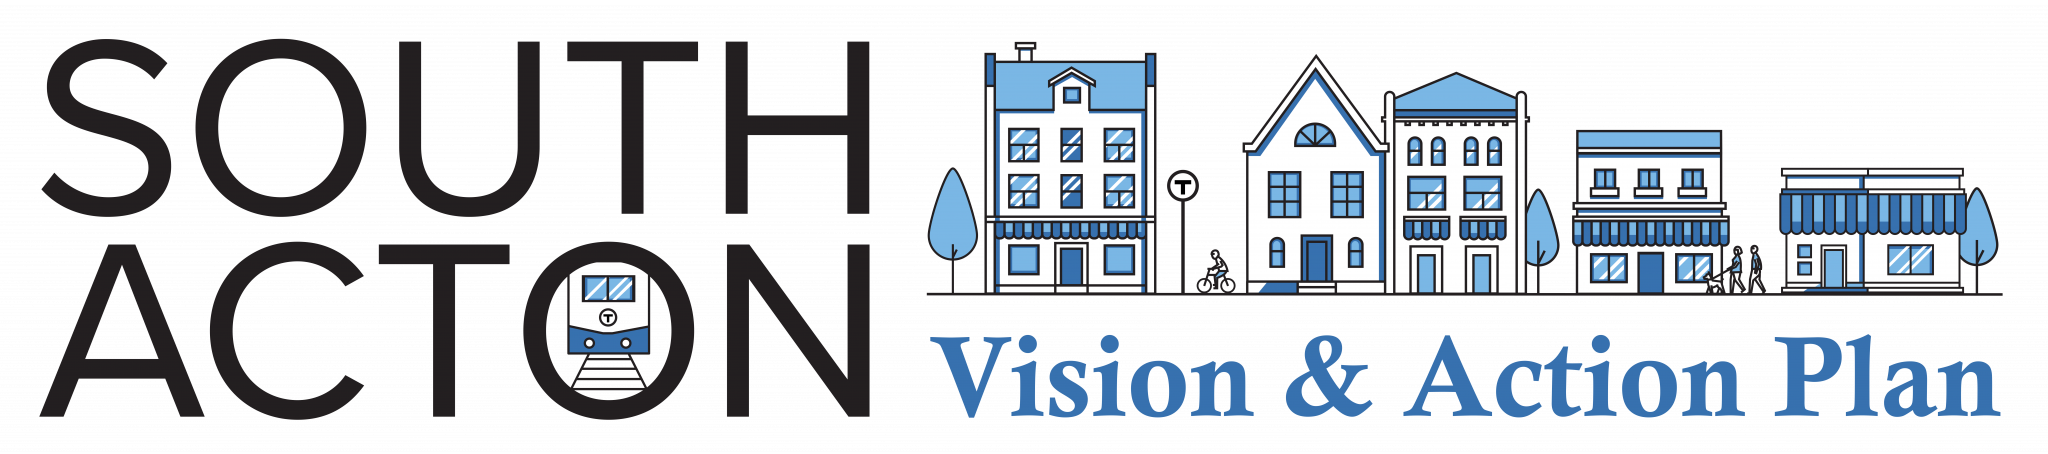 South Acton Vision & Action Plan logo